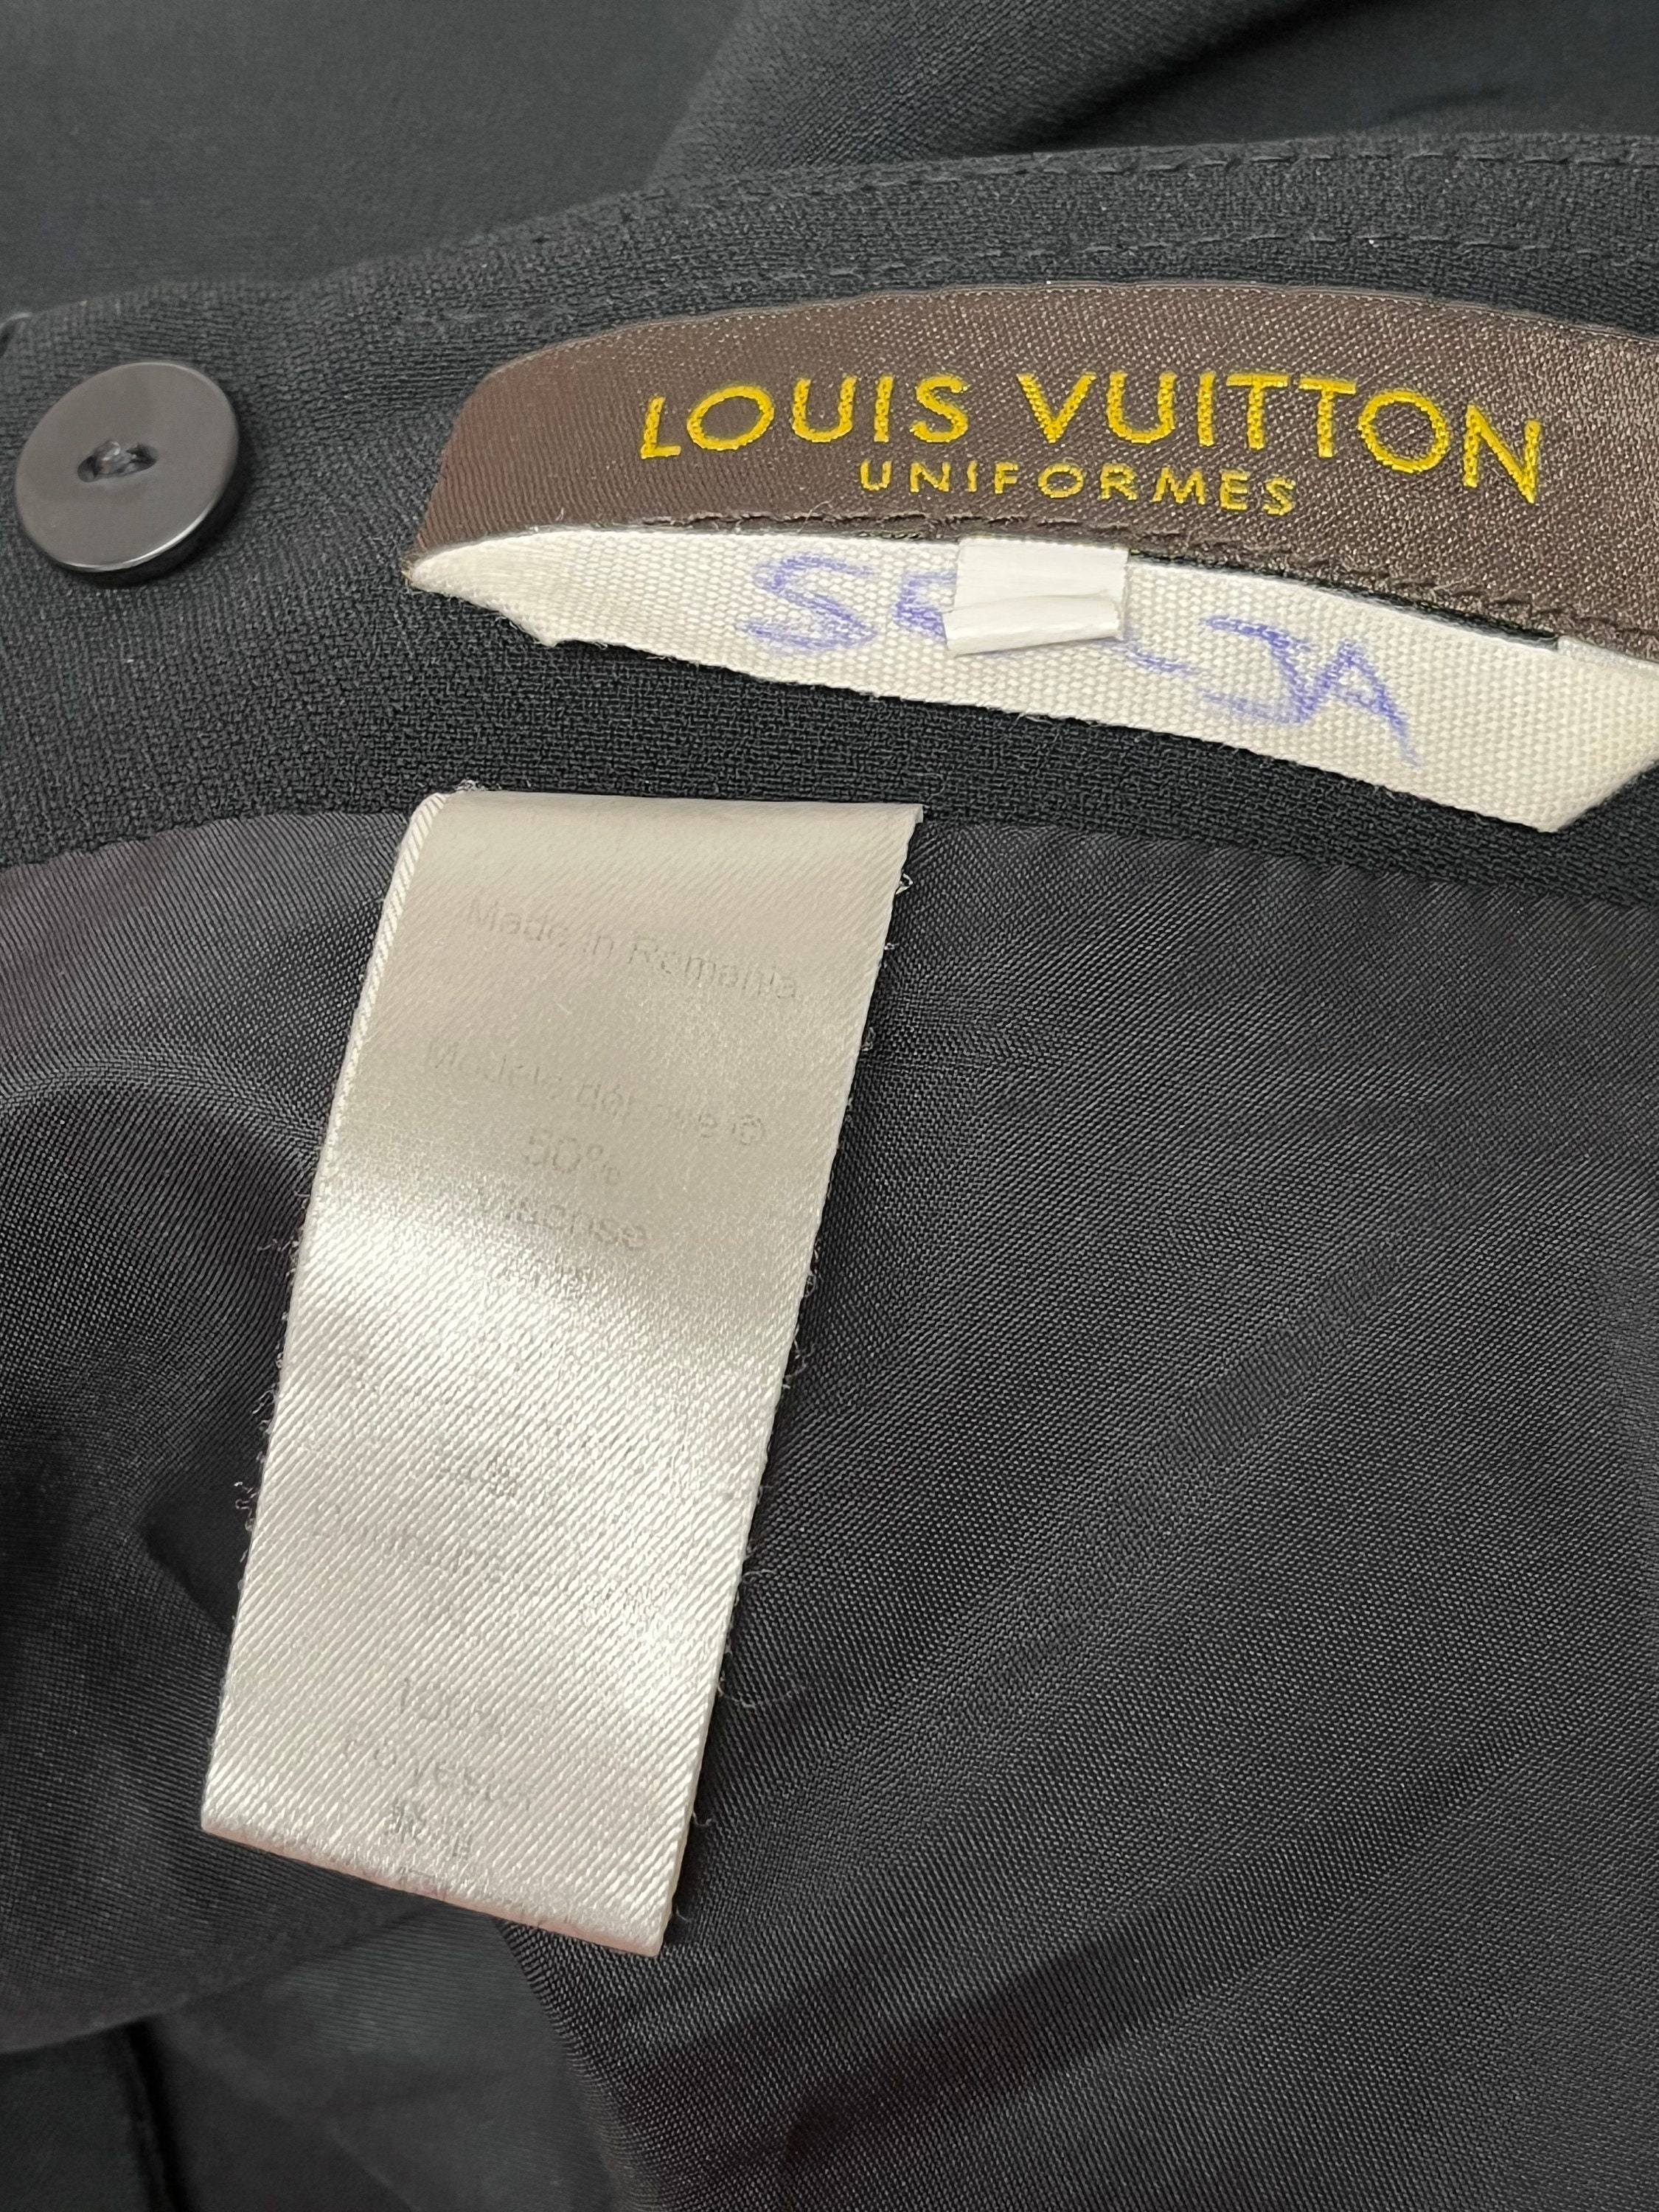 Louis Vuitton Uniformes Women's Blue Black A-Line Short Skirt Side